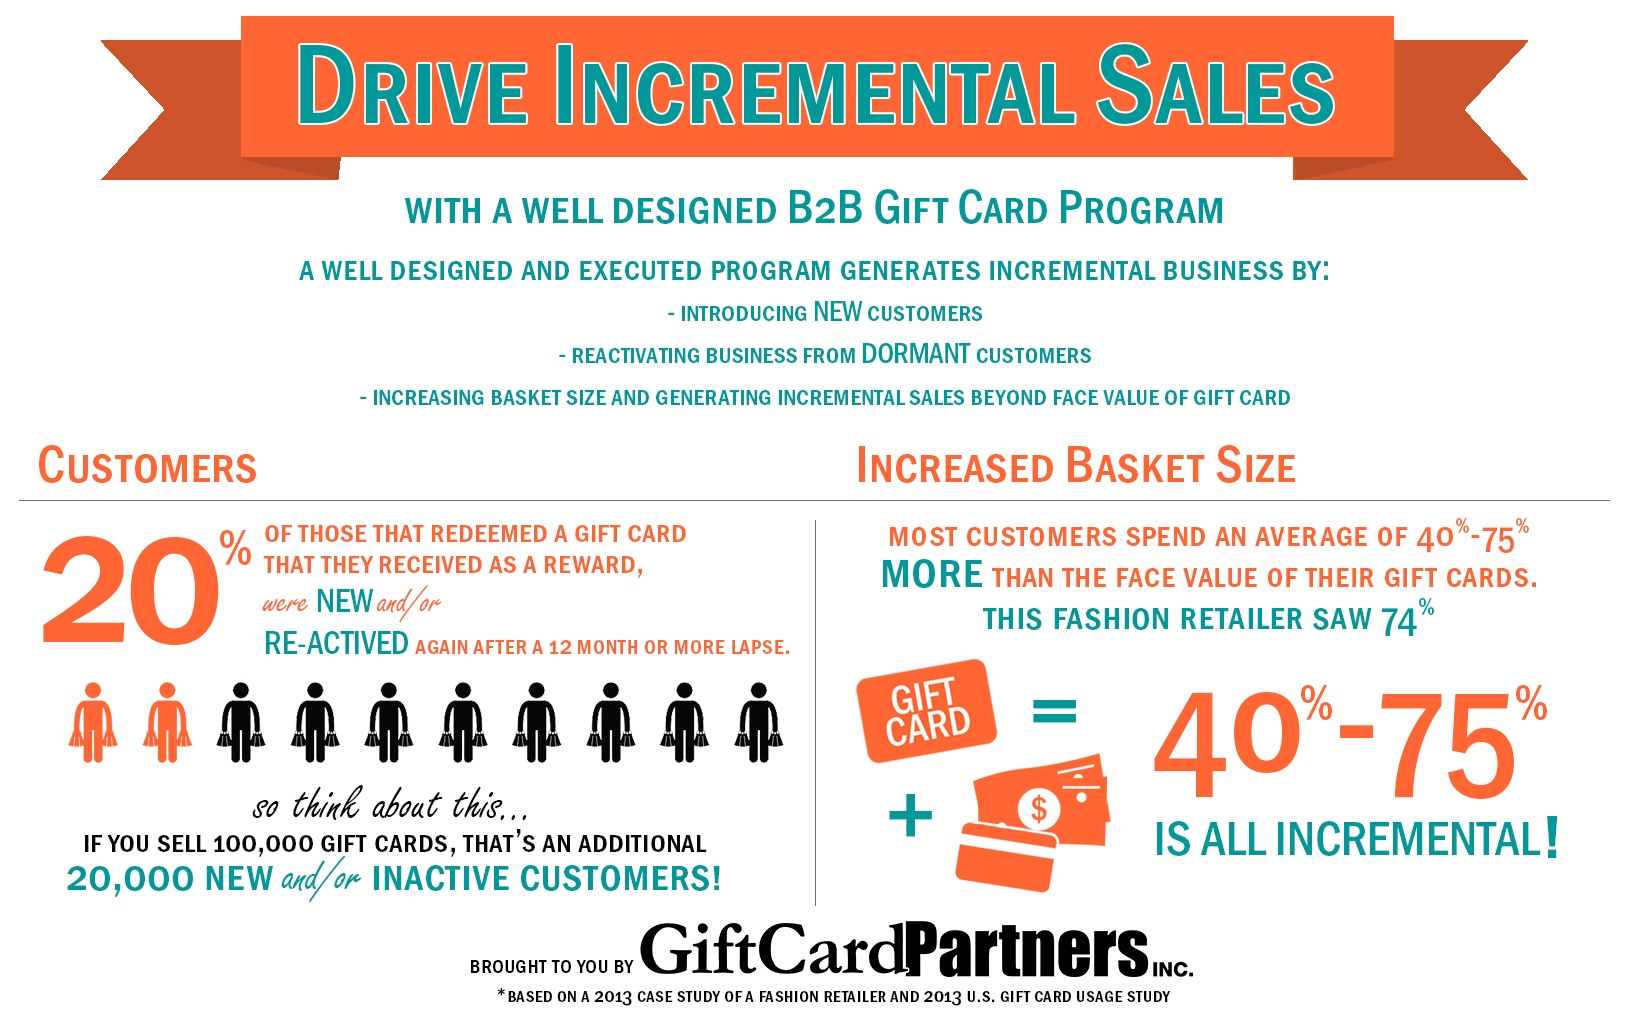 Drive Incremental Sales with B2B Gift Card Program